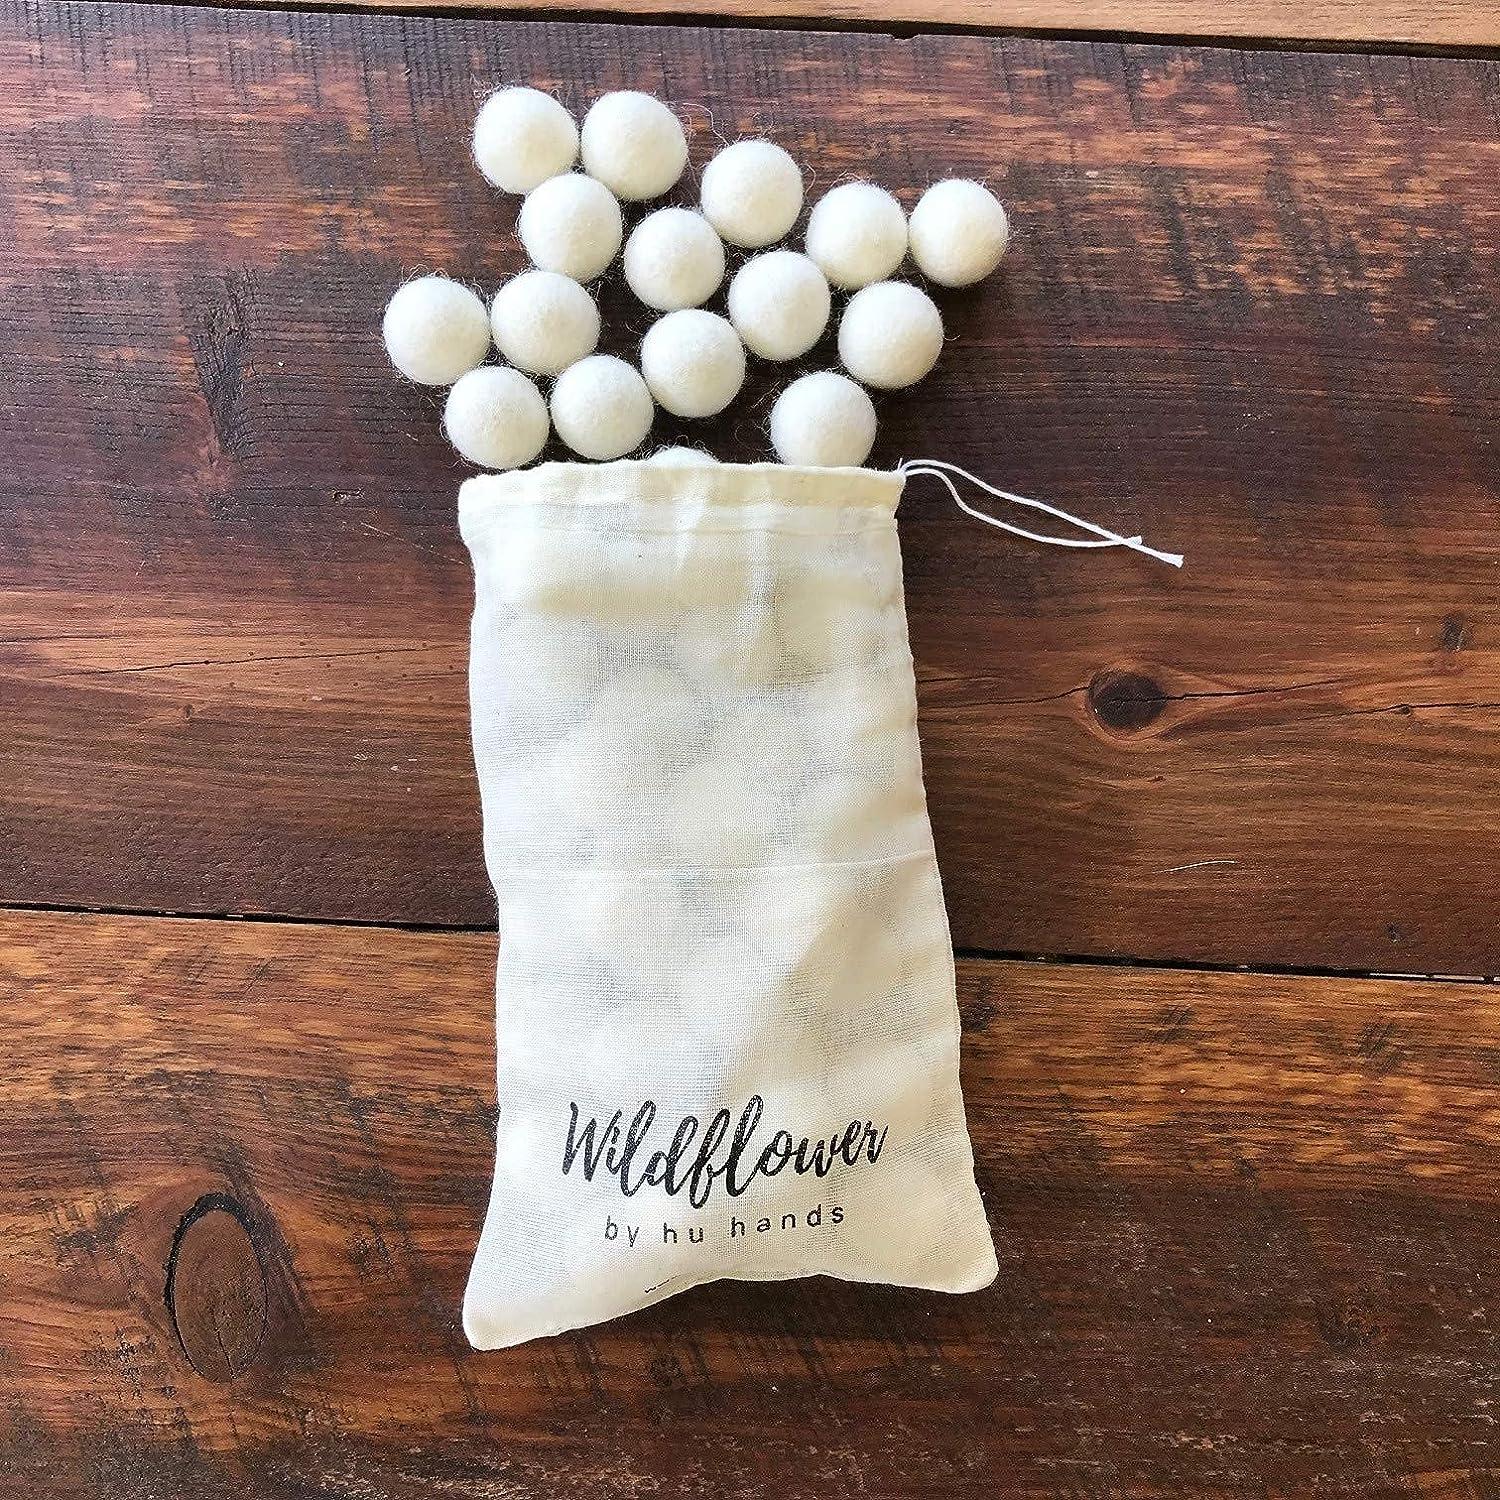 Garland Natural White Felt Balls 1 inch (2.5cm), (50) Wool Pom Poms